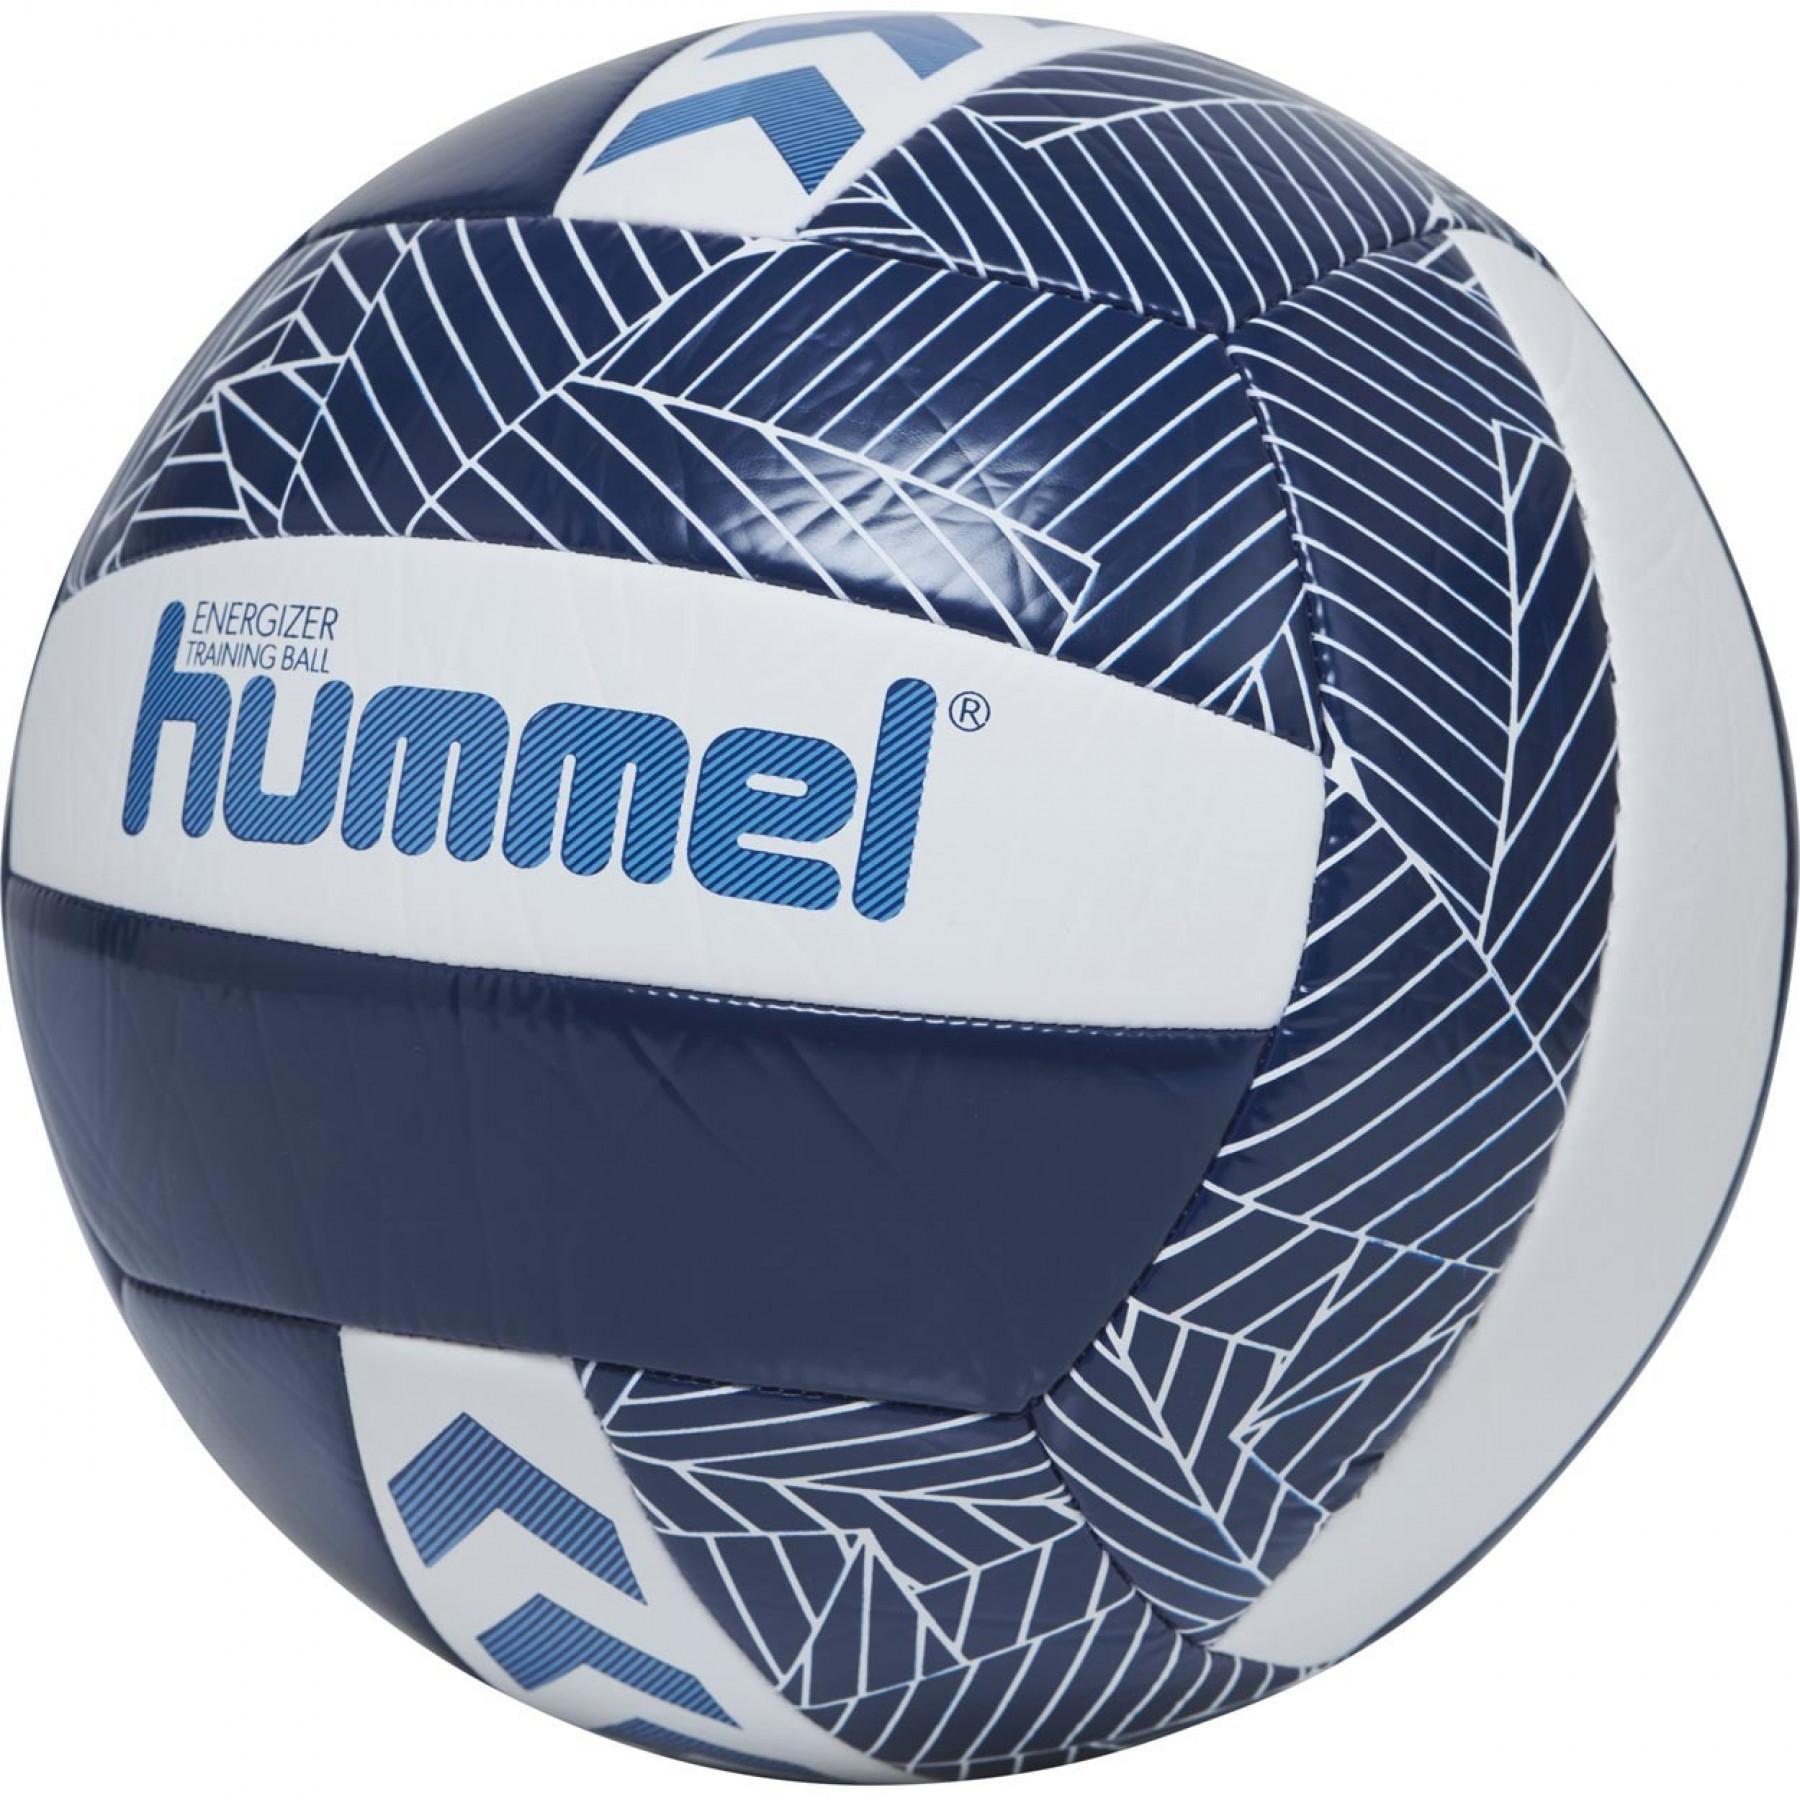 Conjunto de 3 bolas de voleibol Hummel Energizer [Taille5]